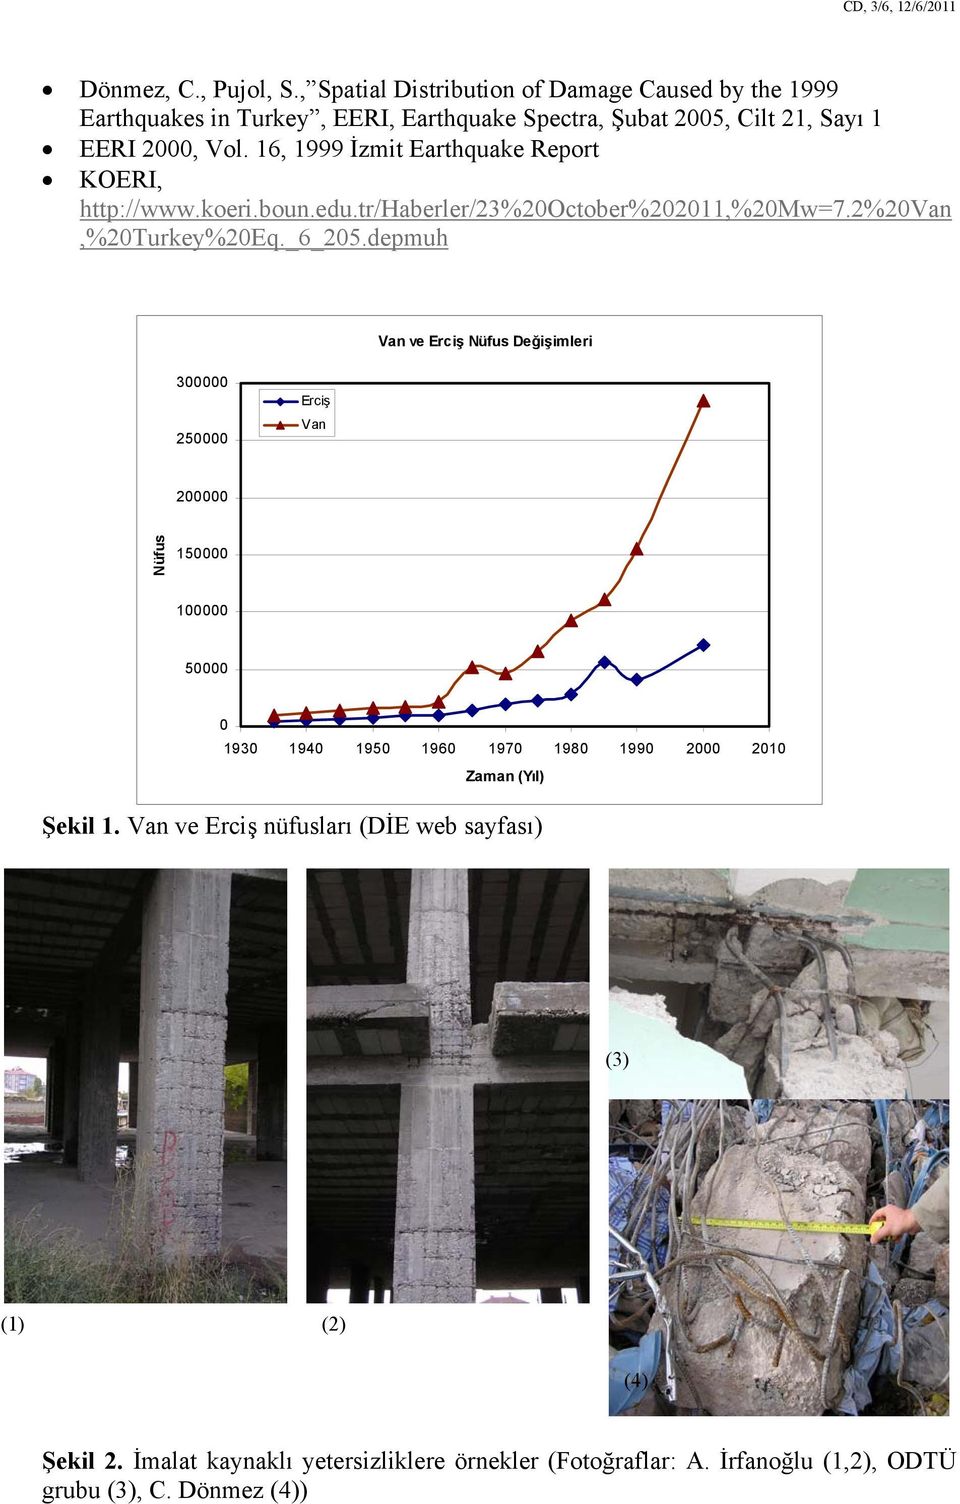 16, 1999 İzmit Earthquake Report KOERI, http://www.koeri.boun.edu.tr/haberler/23%20october%202011,%20mw=7.2%20van,%20turkey%20eq._6_205.